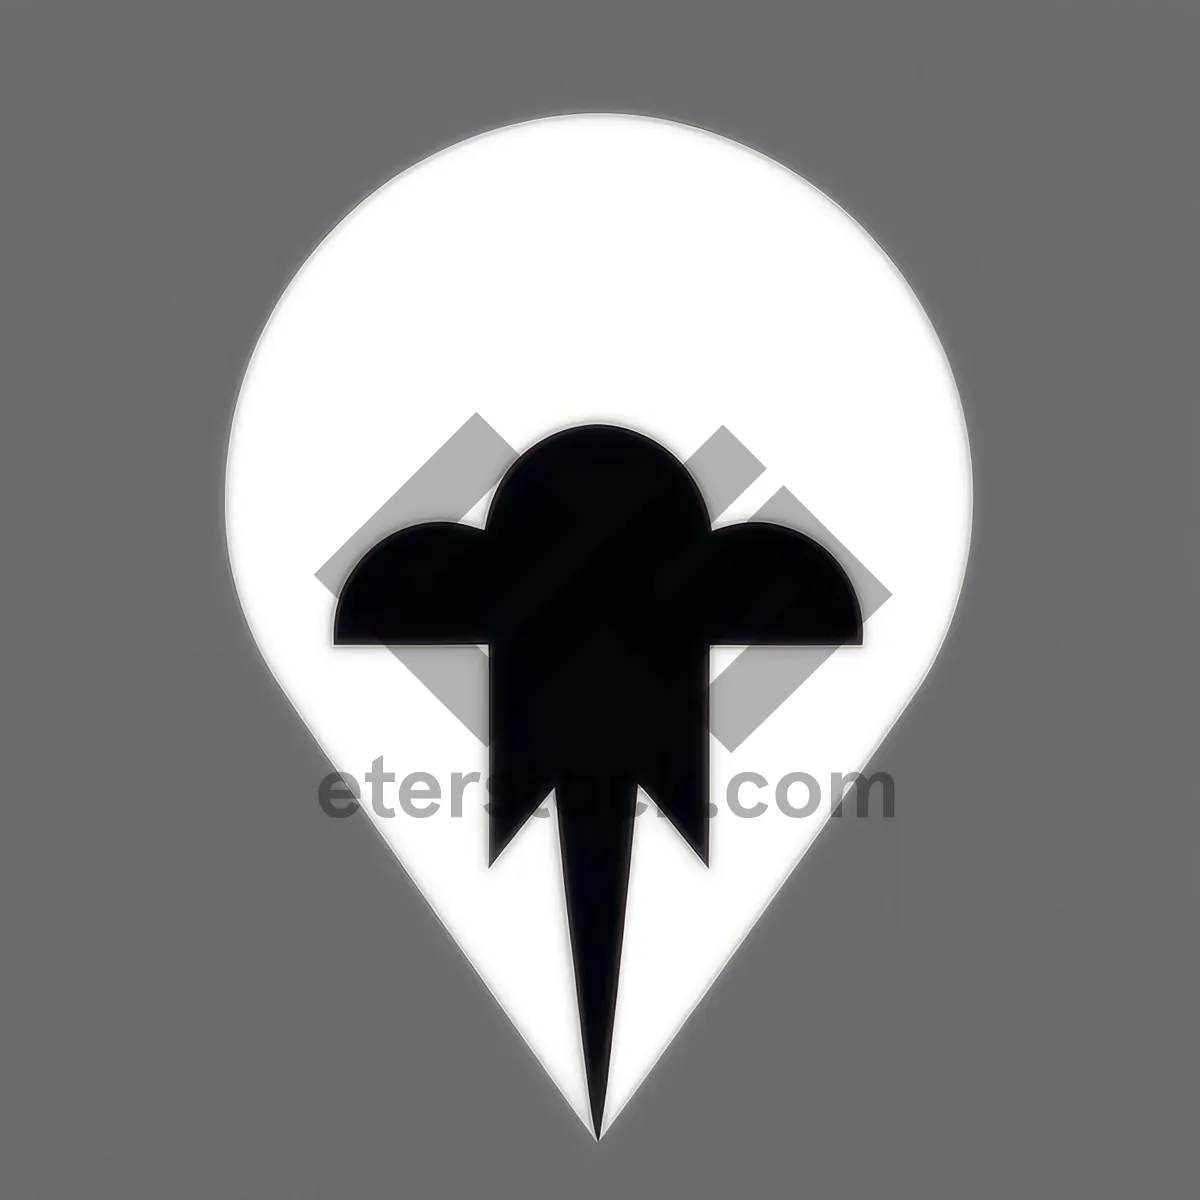 Black Graphic Symbol Icon: Sleek and Minimalistic Design